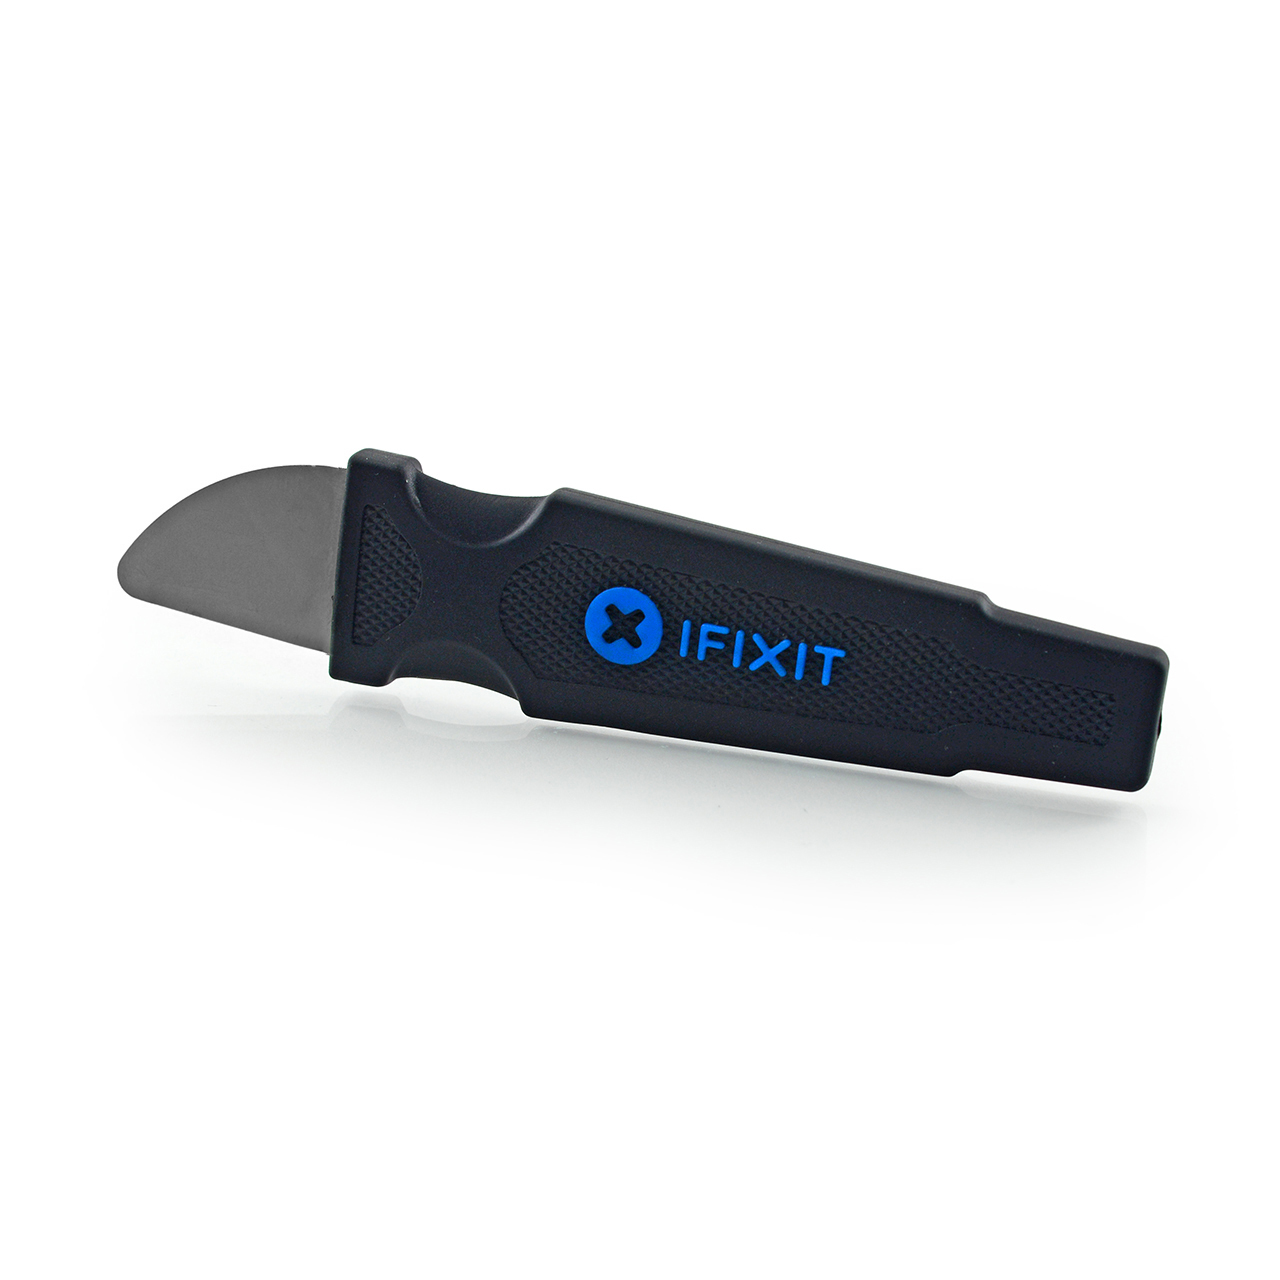 iFixit EU145259 electronic device repair tool 1 tools